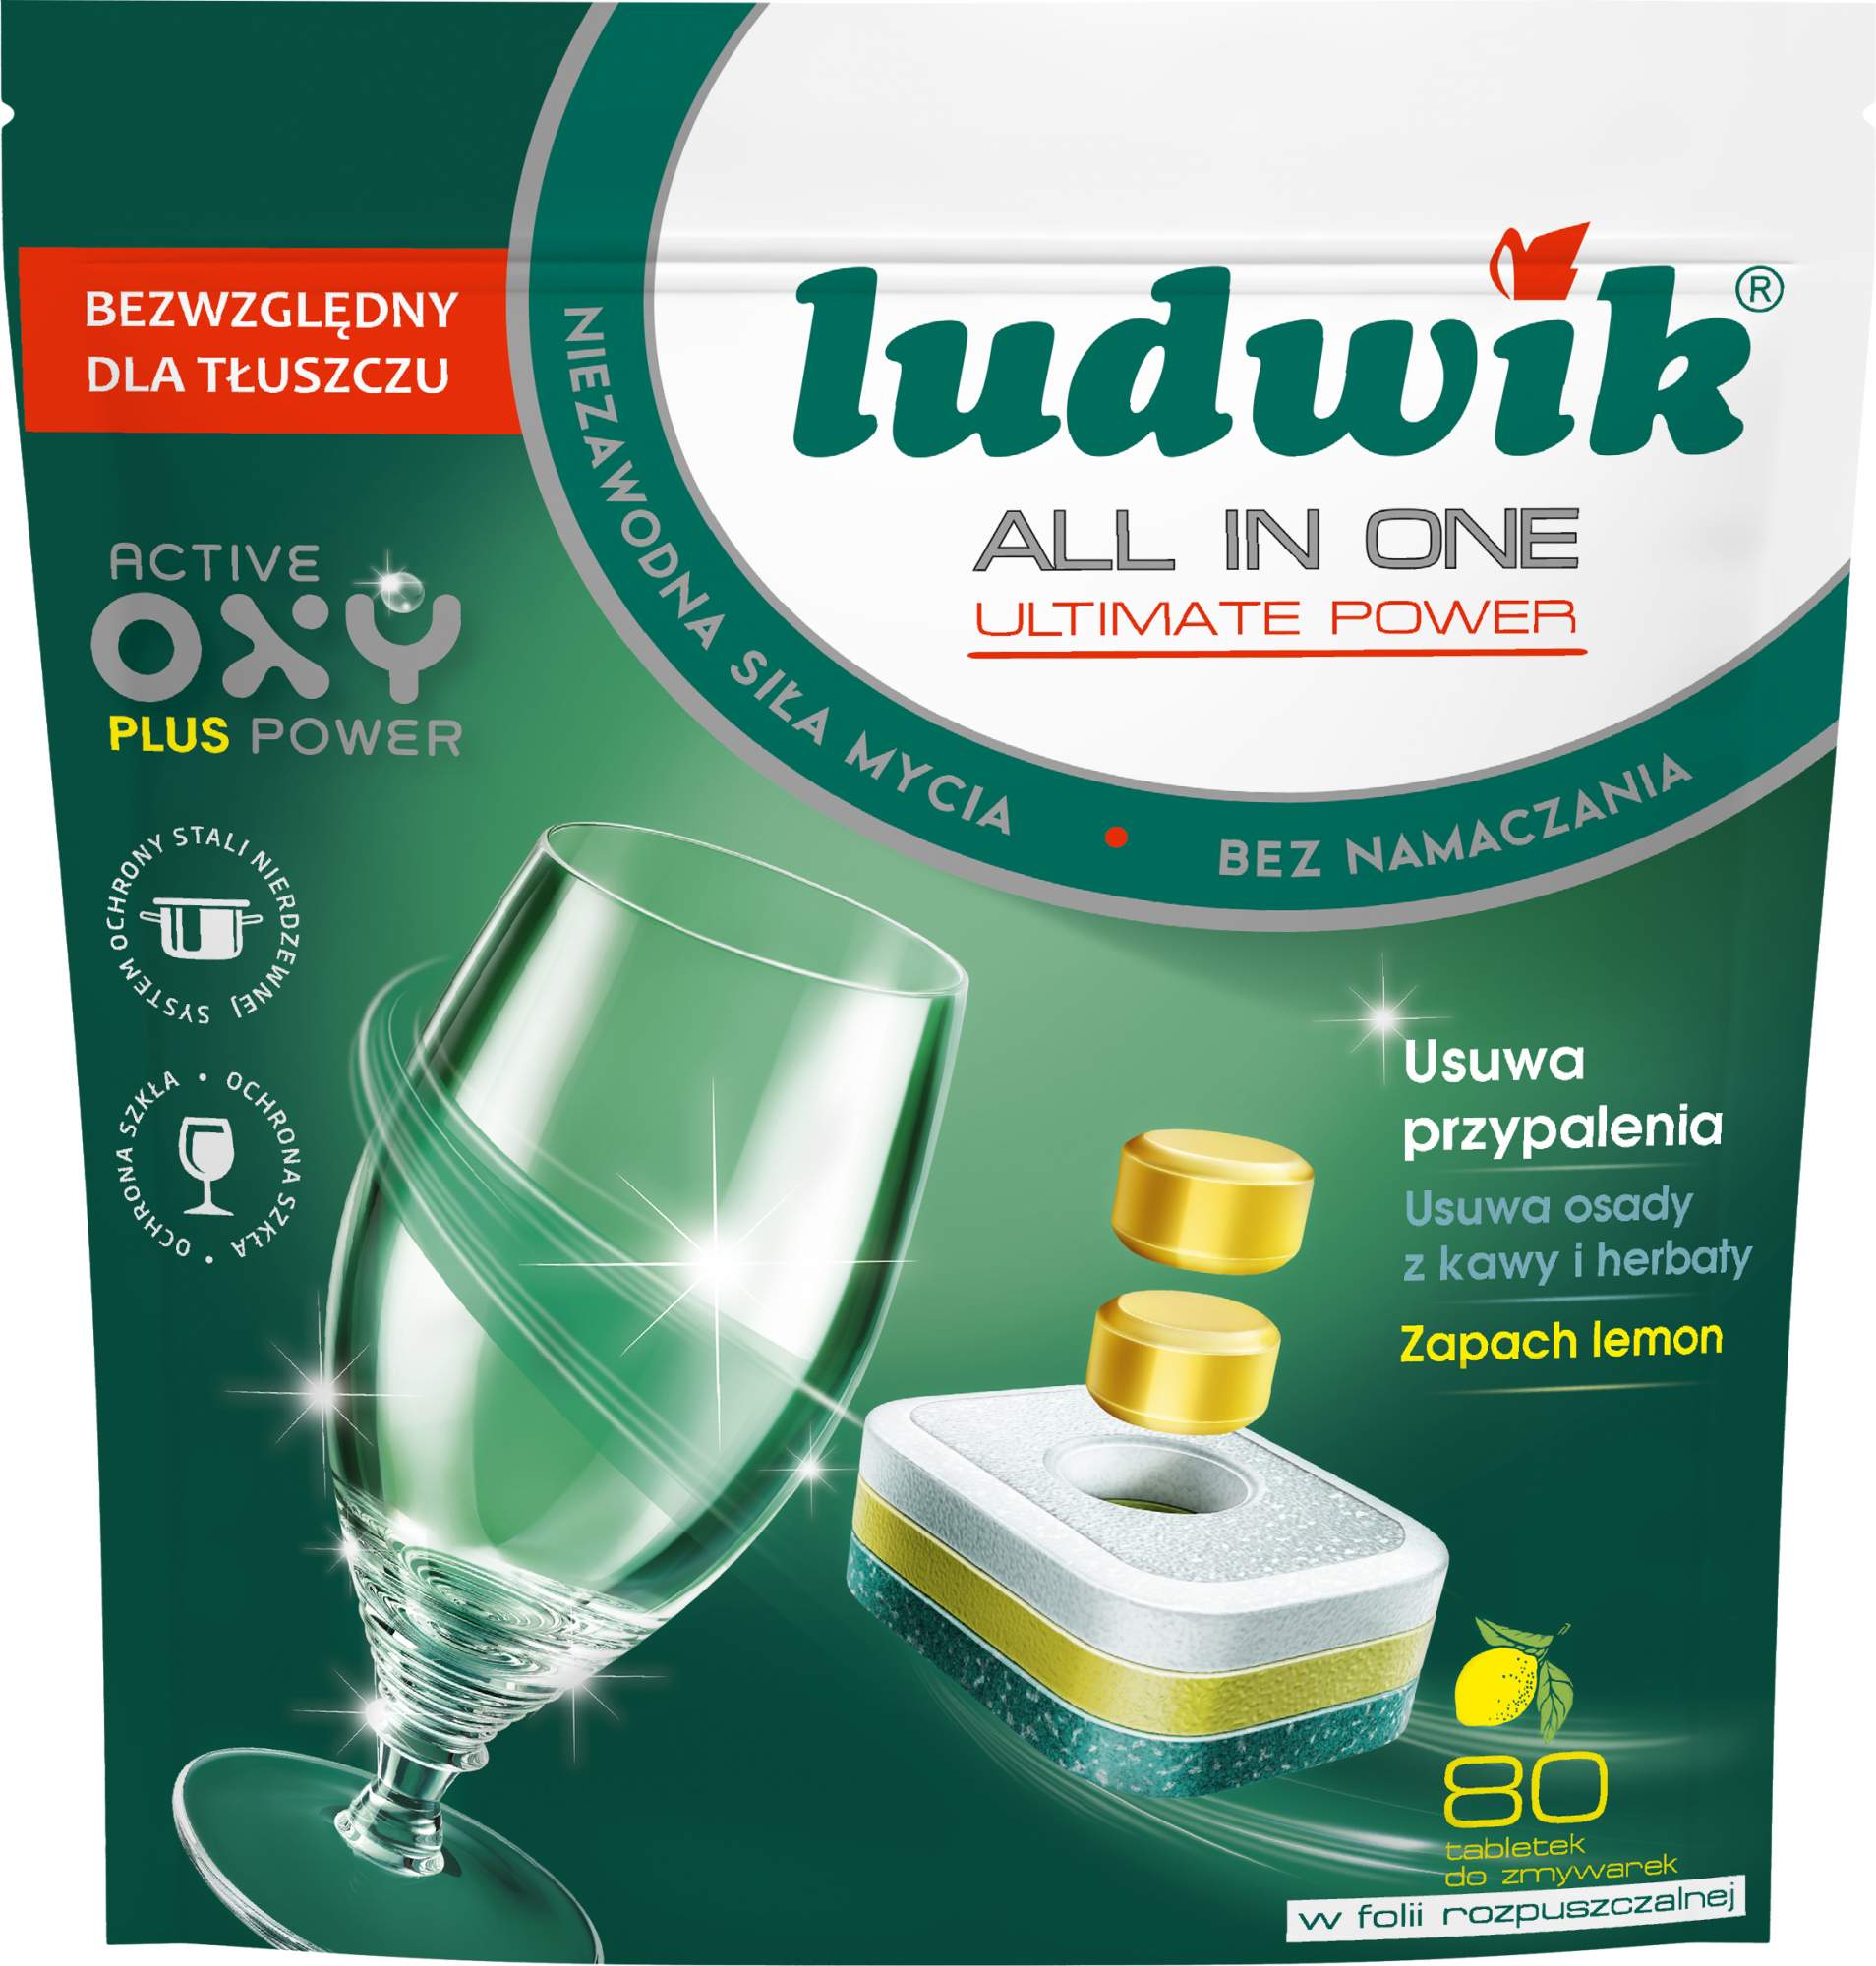 Таблетки Ludwik all in one lemon в водорастворимой упаковке  80 штук